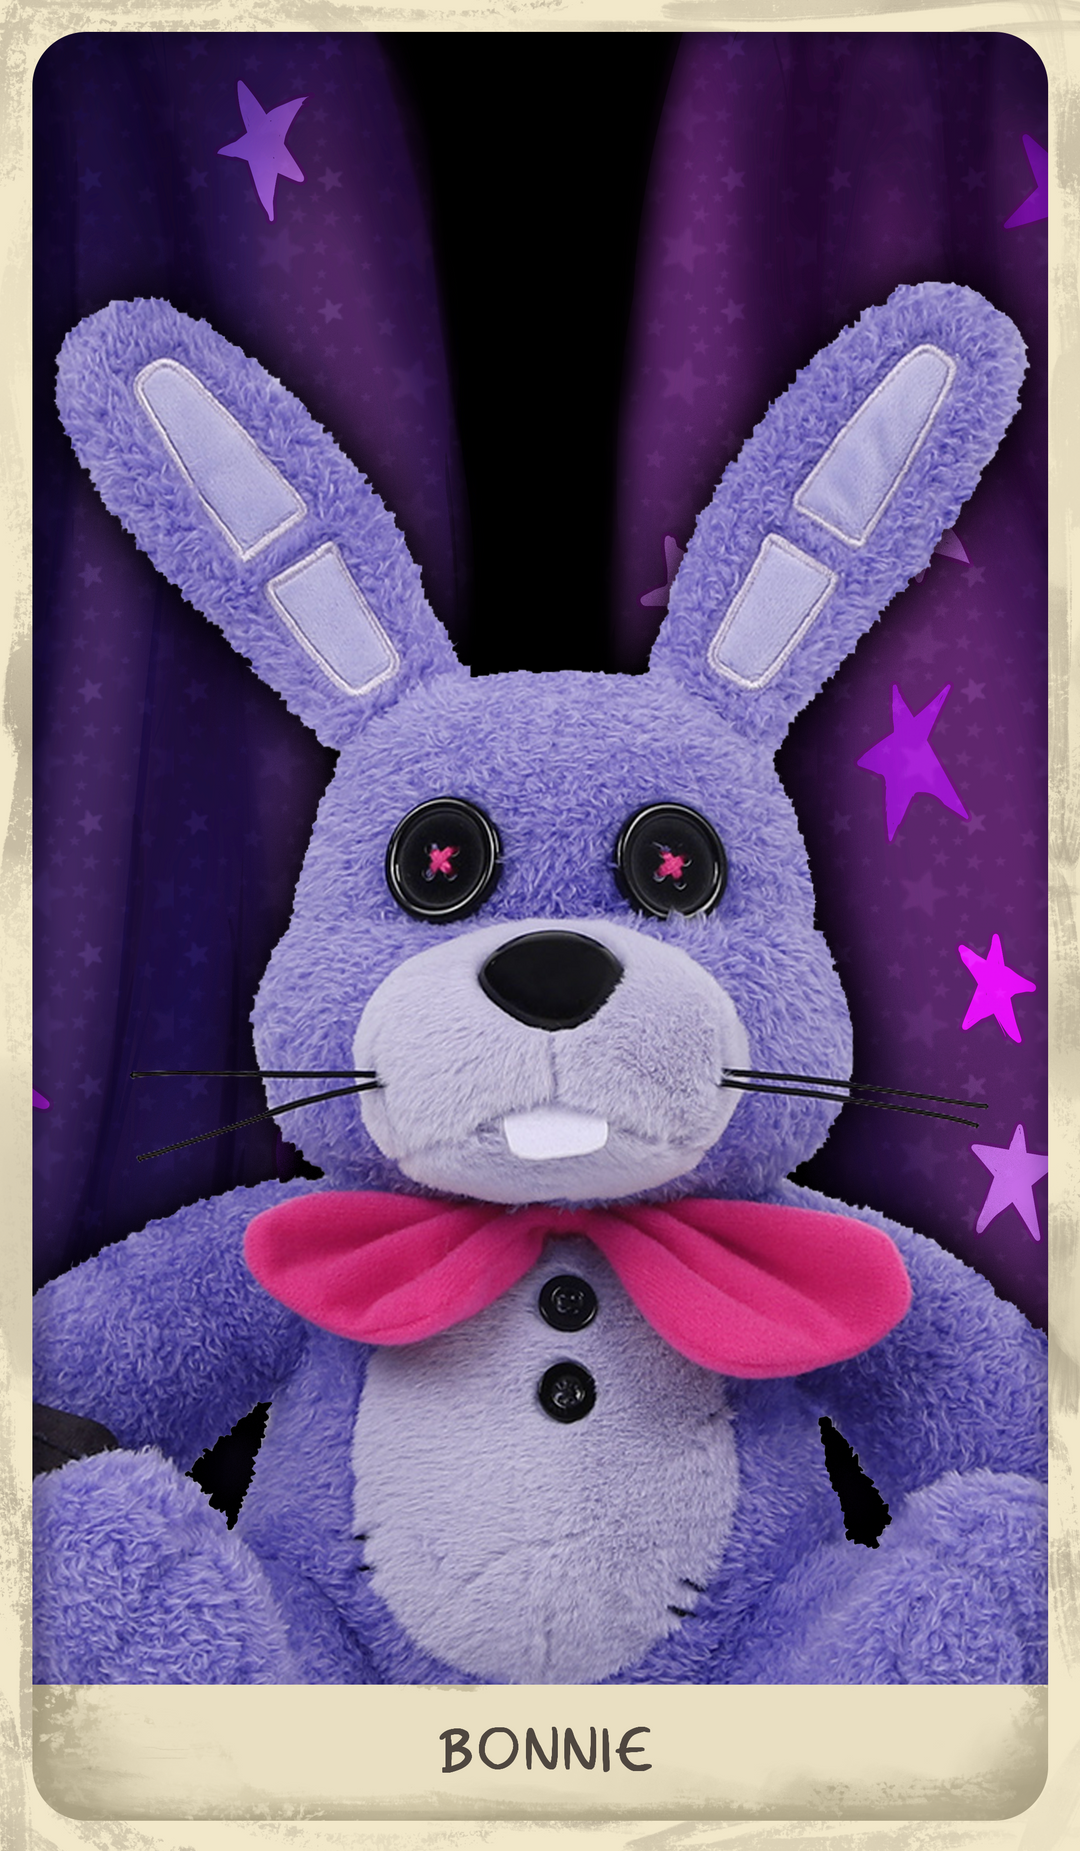 Cute Fnaf Purple Plush Nightmare Bonnie Plush Toys Five Nights At